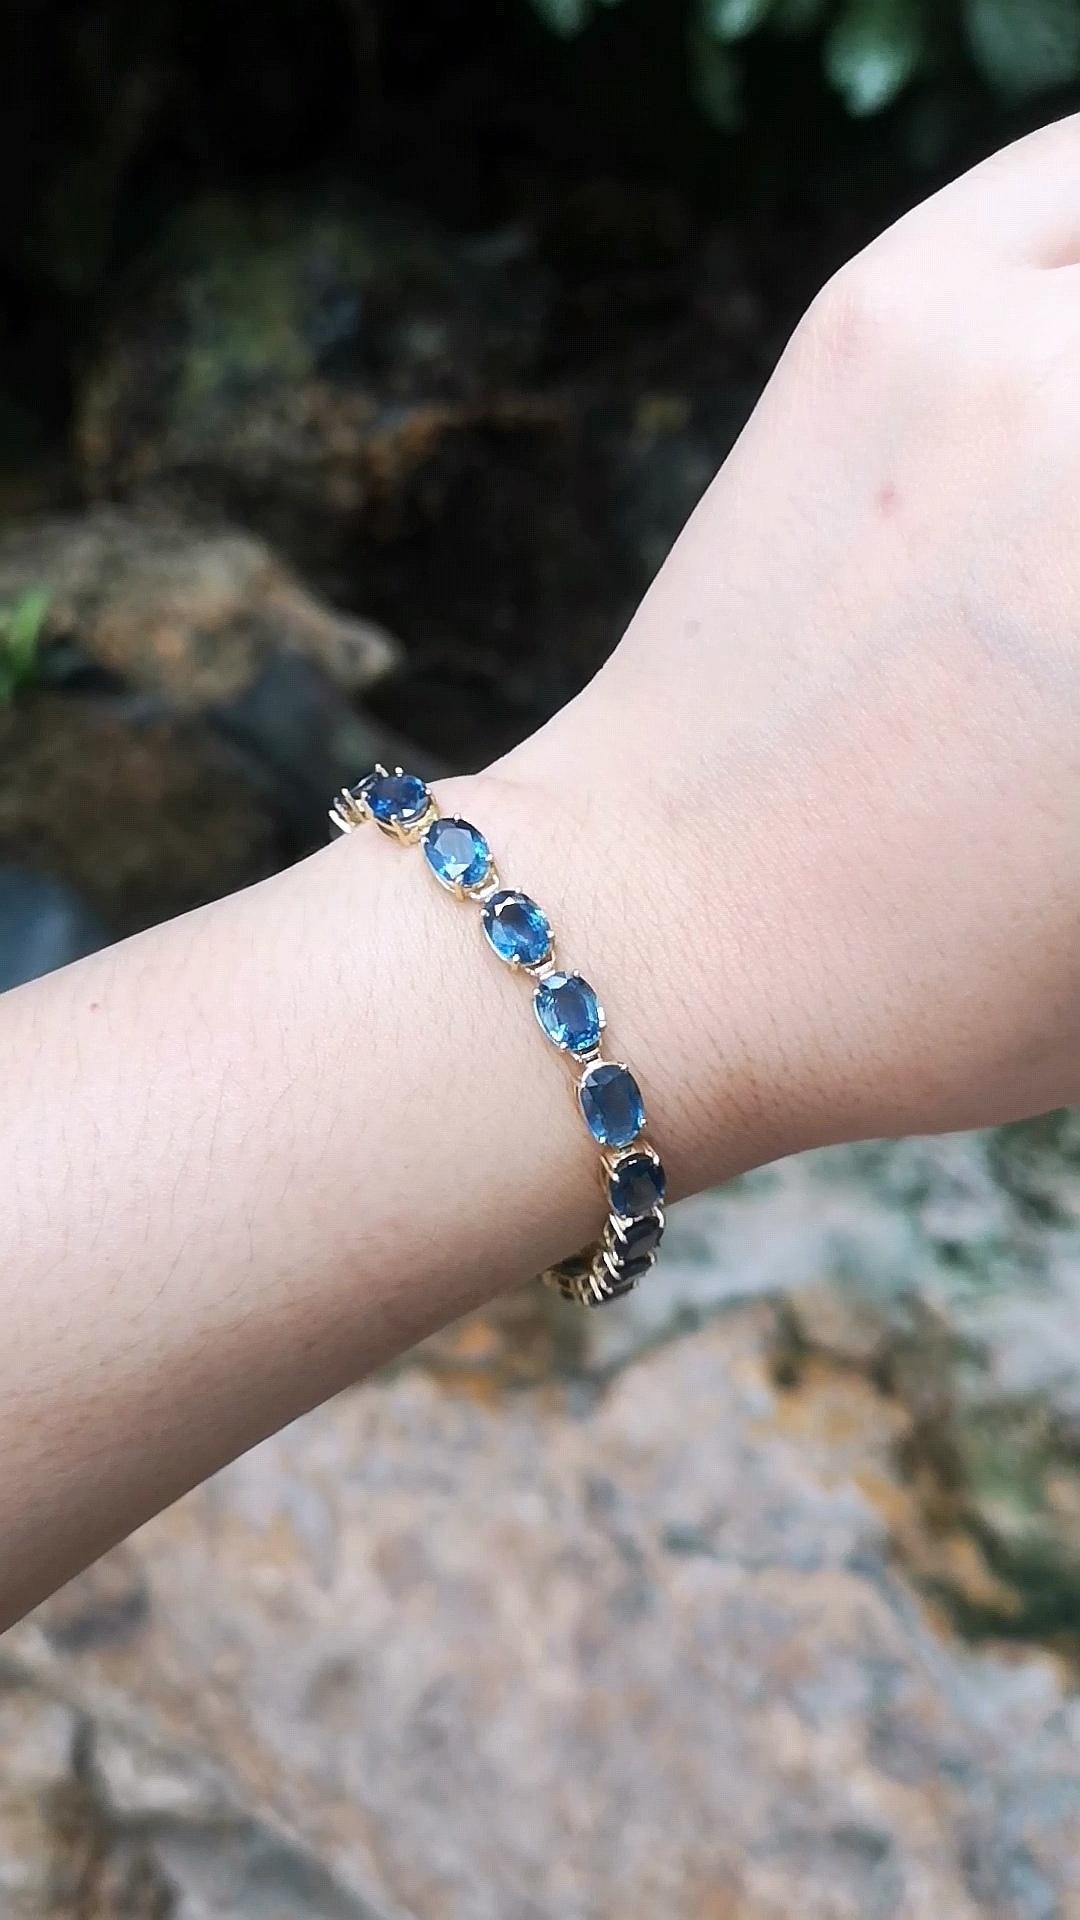 Blue Sapphire 26.53 carats Bracelet set in 18 Karat Gold Settings

Width:  0.6 cm 
Length: 18.0 cm
Total Weight: 16.64 grams

